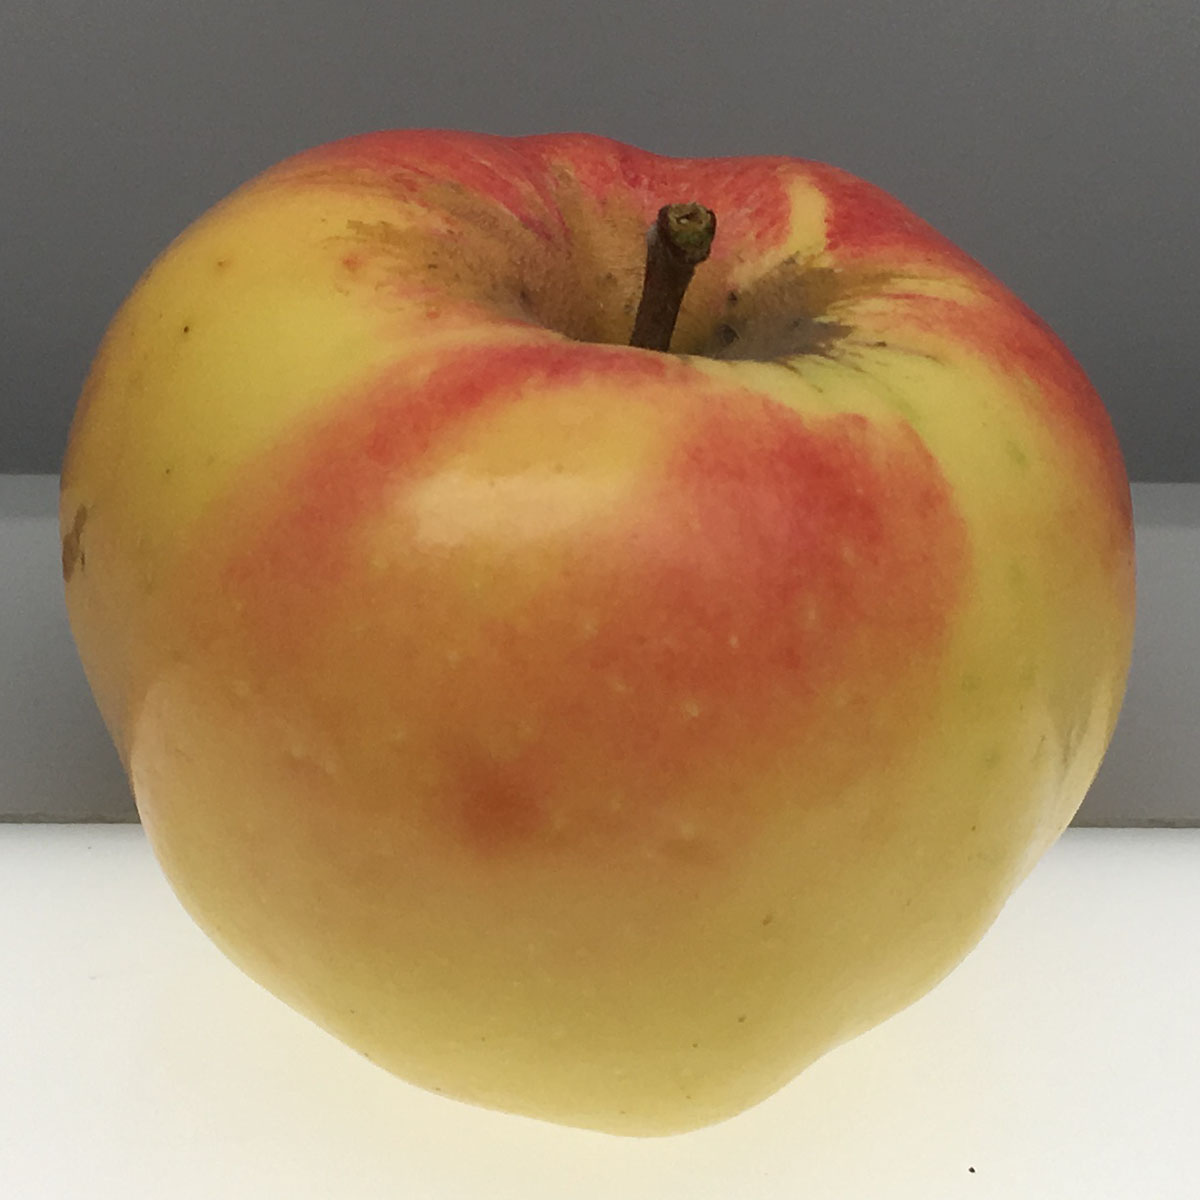 Calville Blanc apple